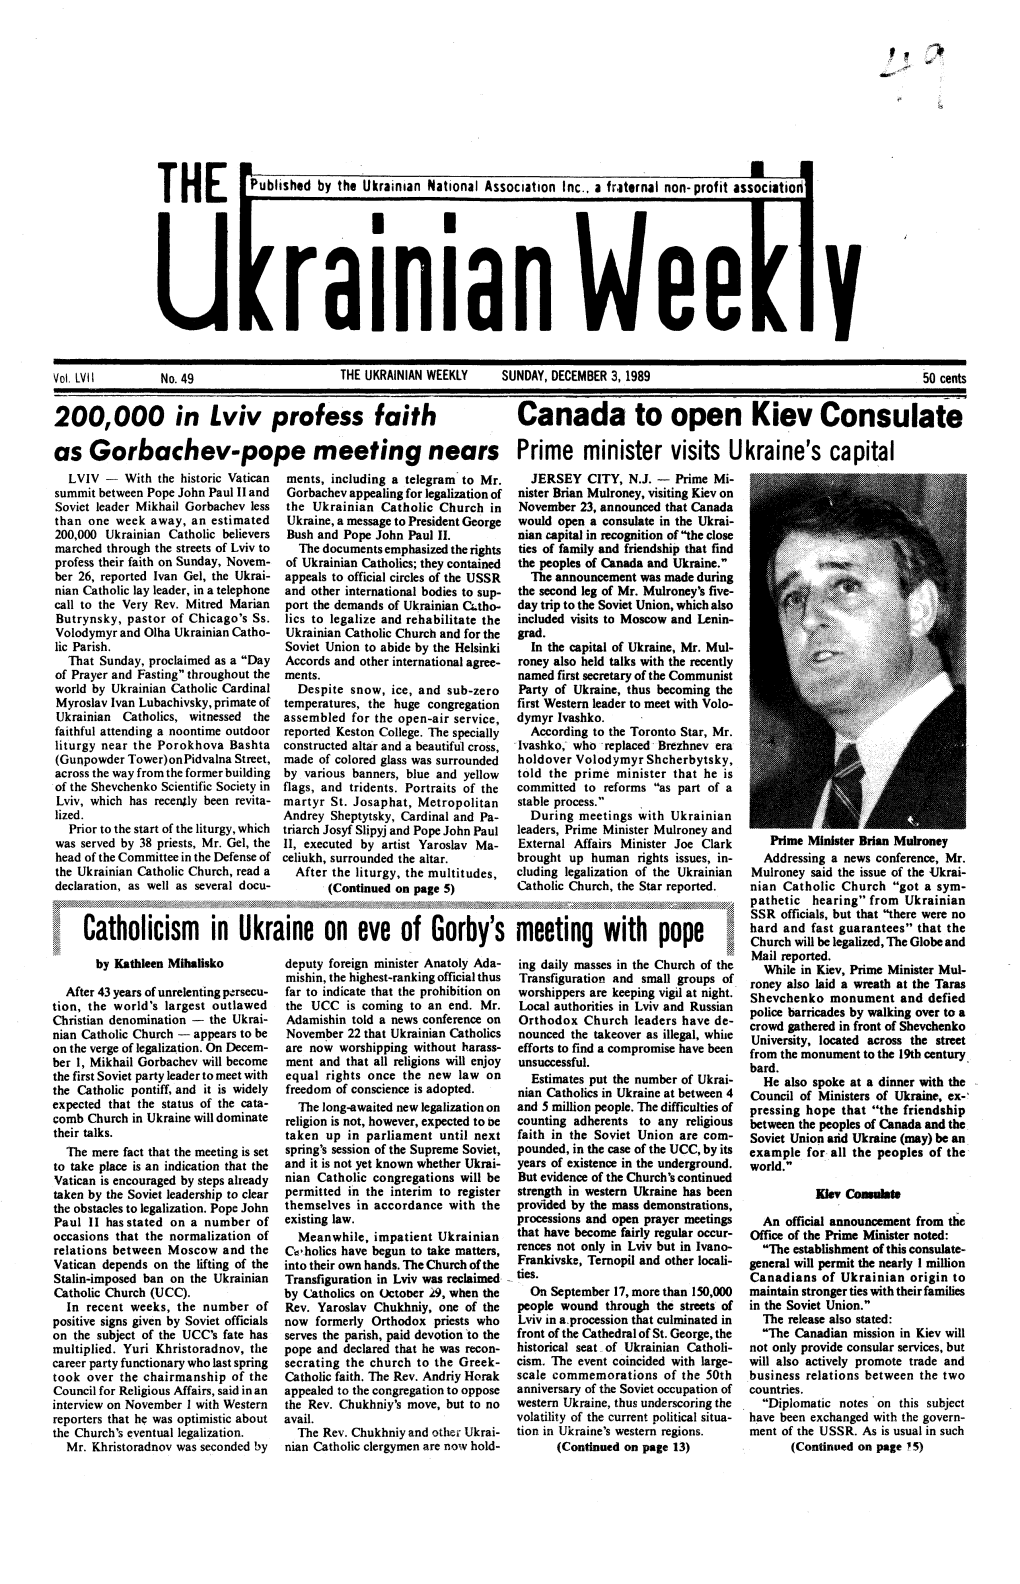 The Ukrainian Weekly 1989, No.49